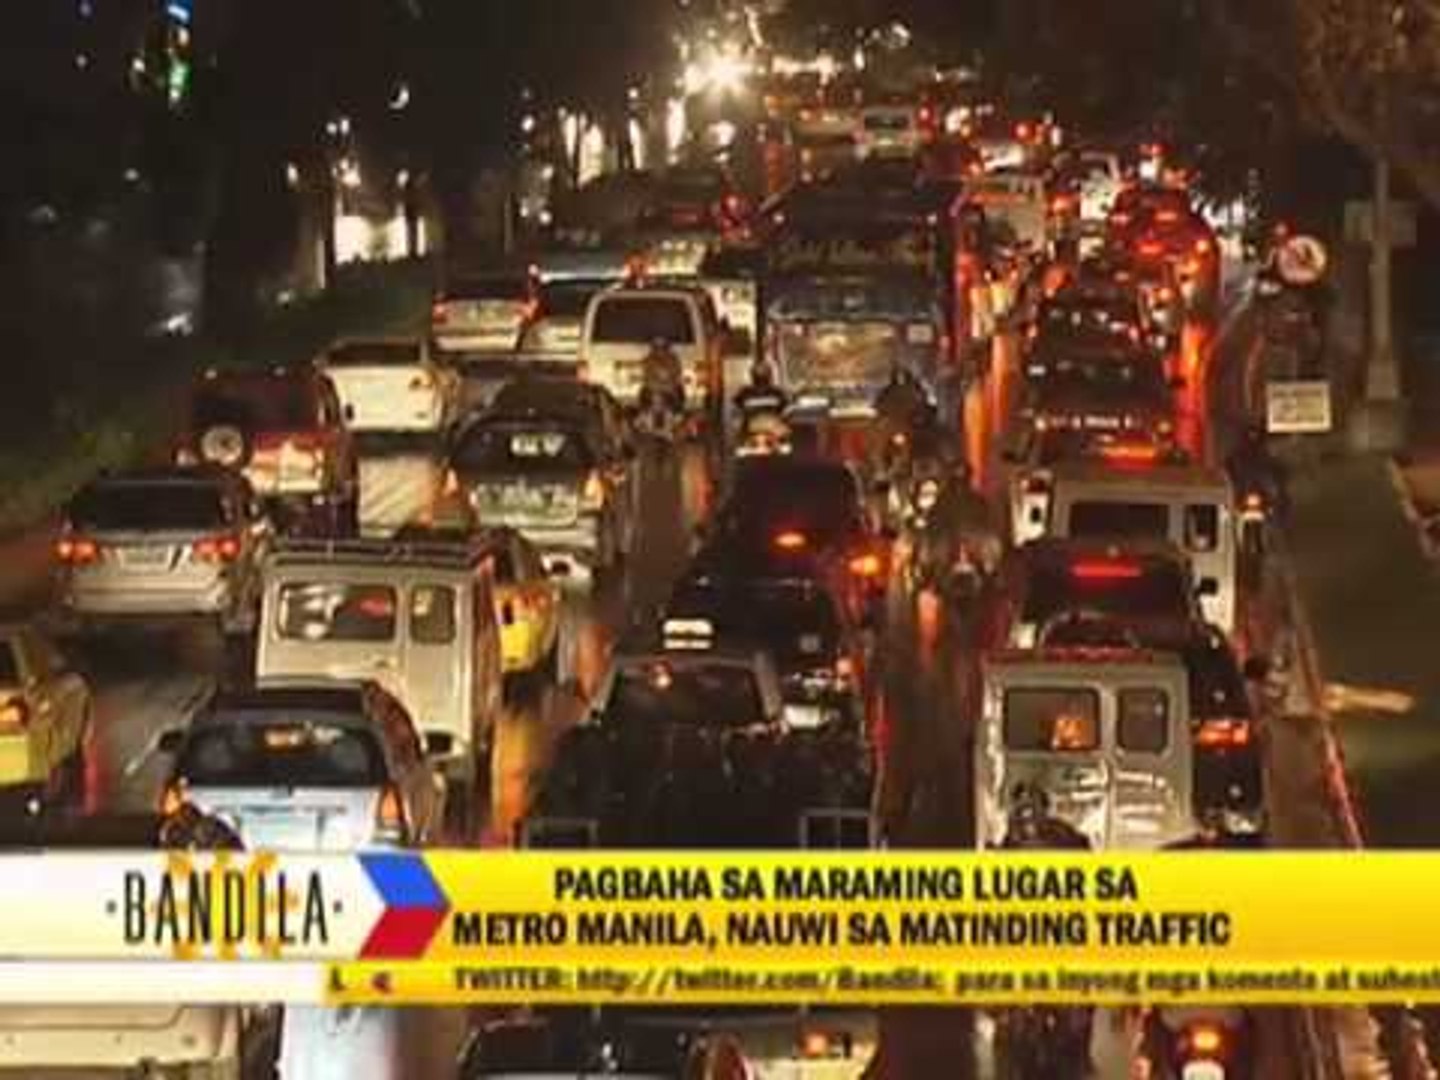 Heavy traffic forces Kris Aquino to ride MRT